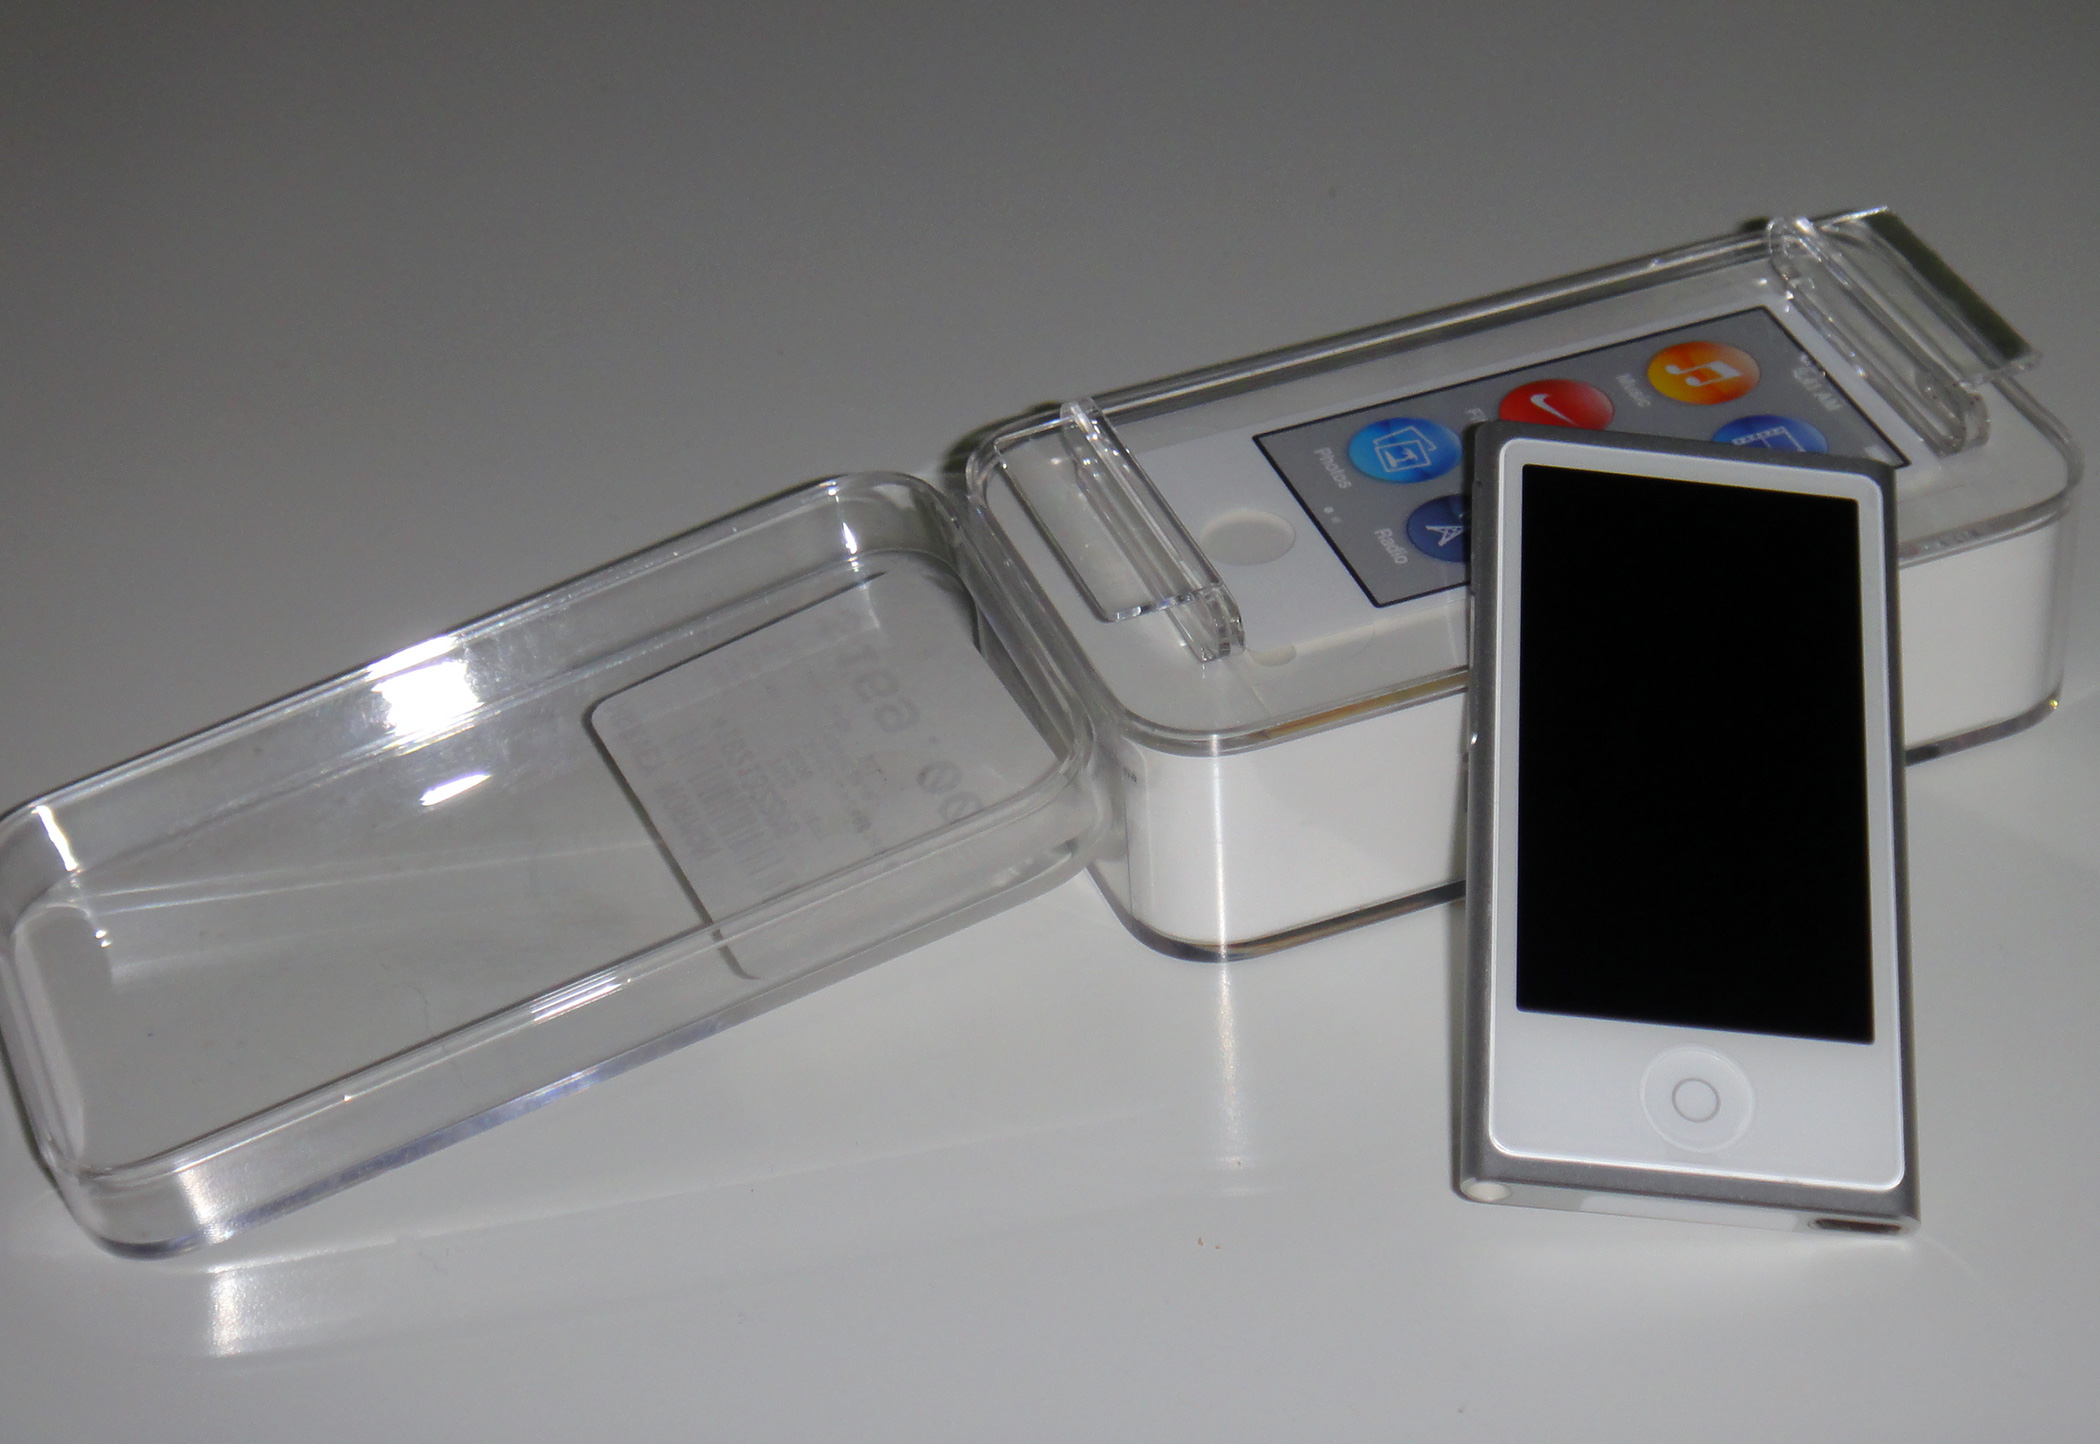 apple ipod nano 7th generation